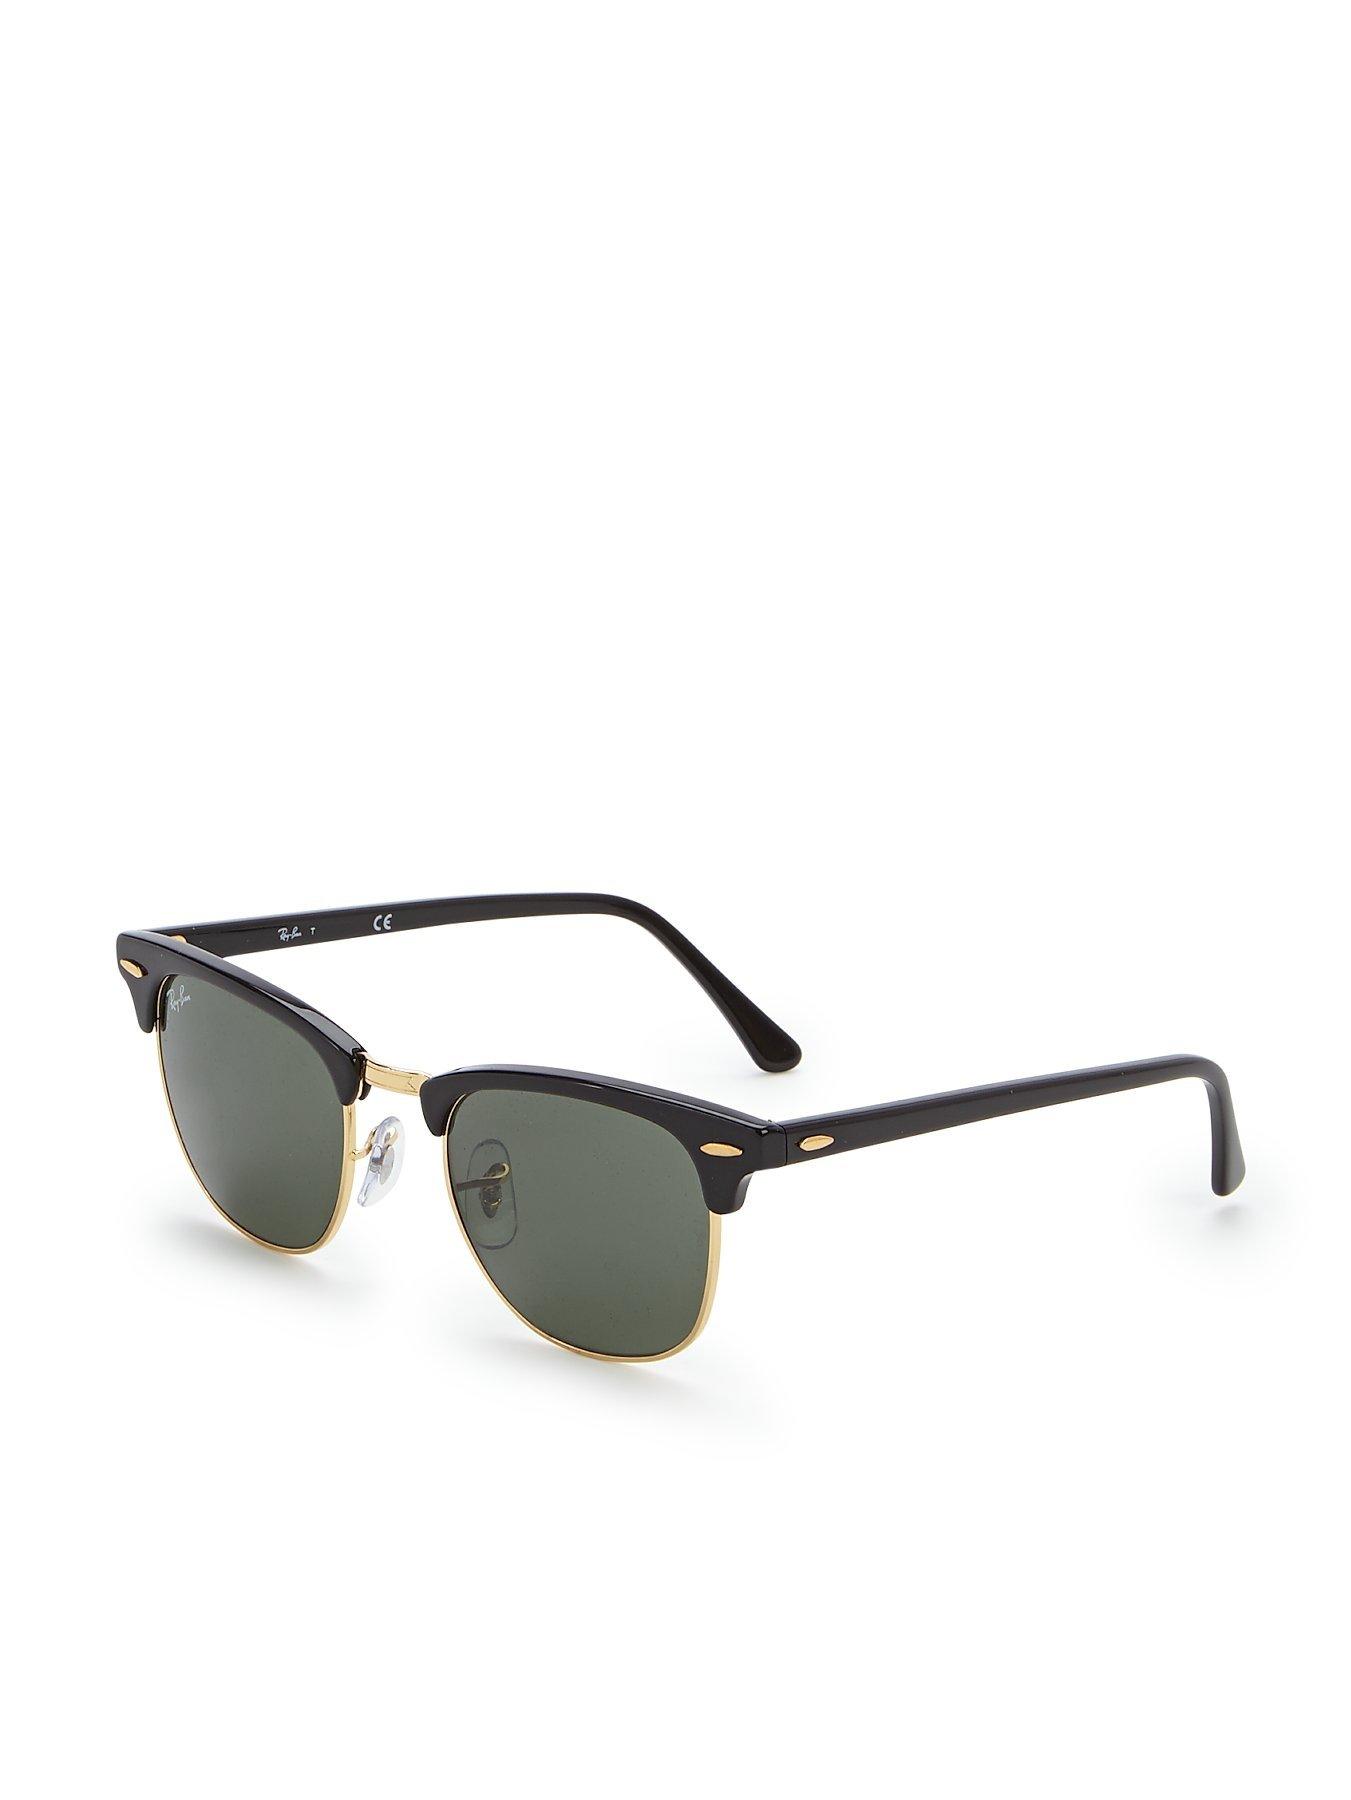 clubmaster sunglasses price